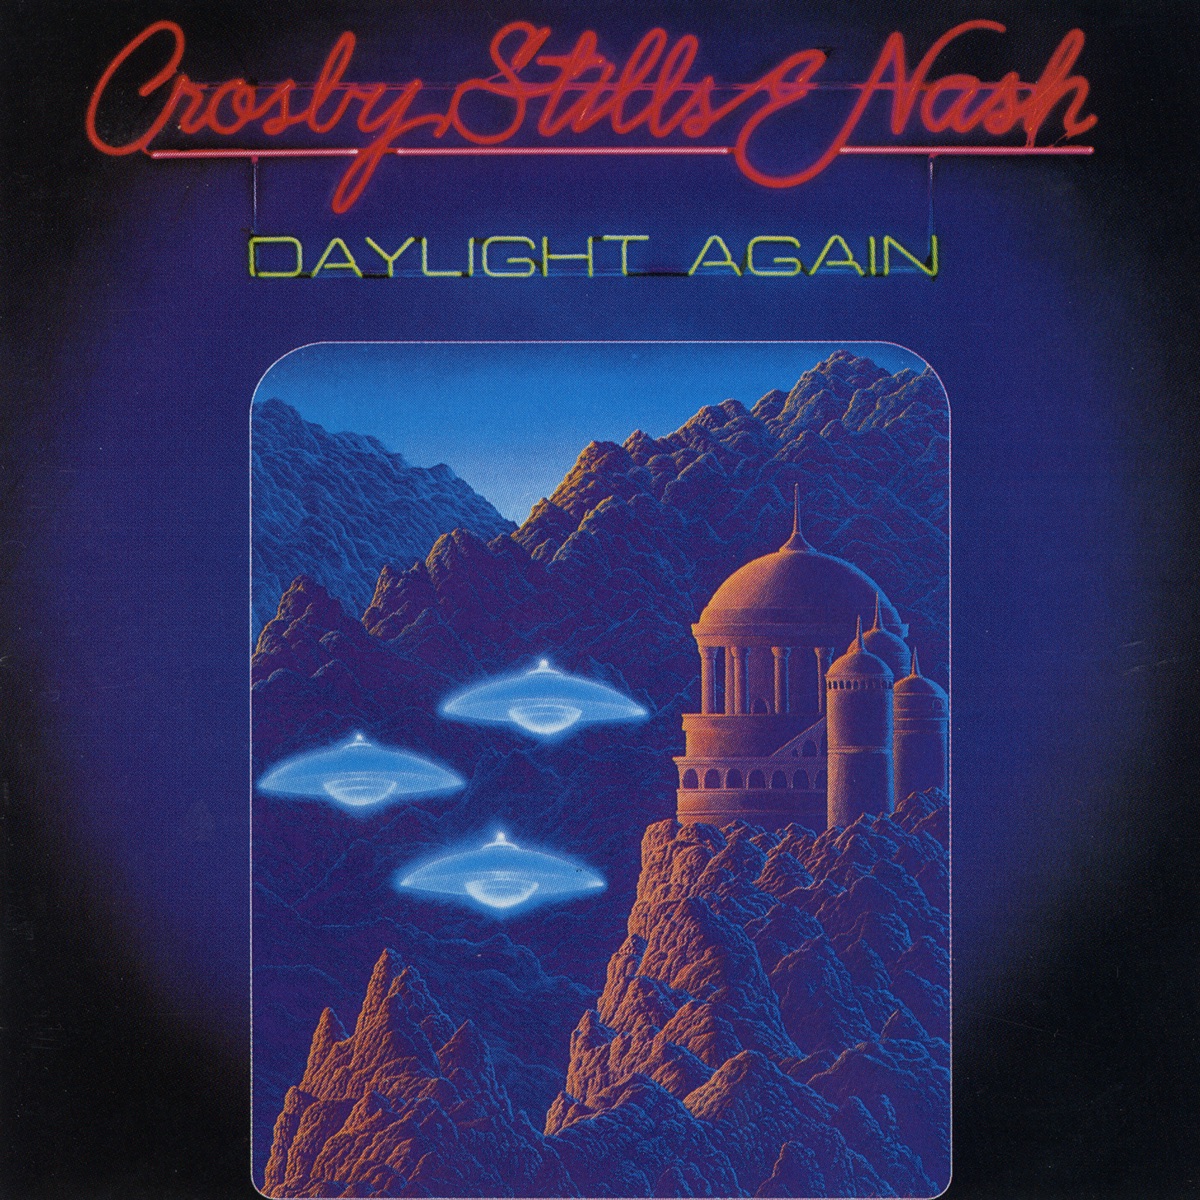 Demos - Album by Crosby, Stills & Nash - Apple Music